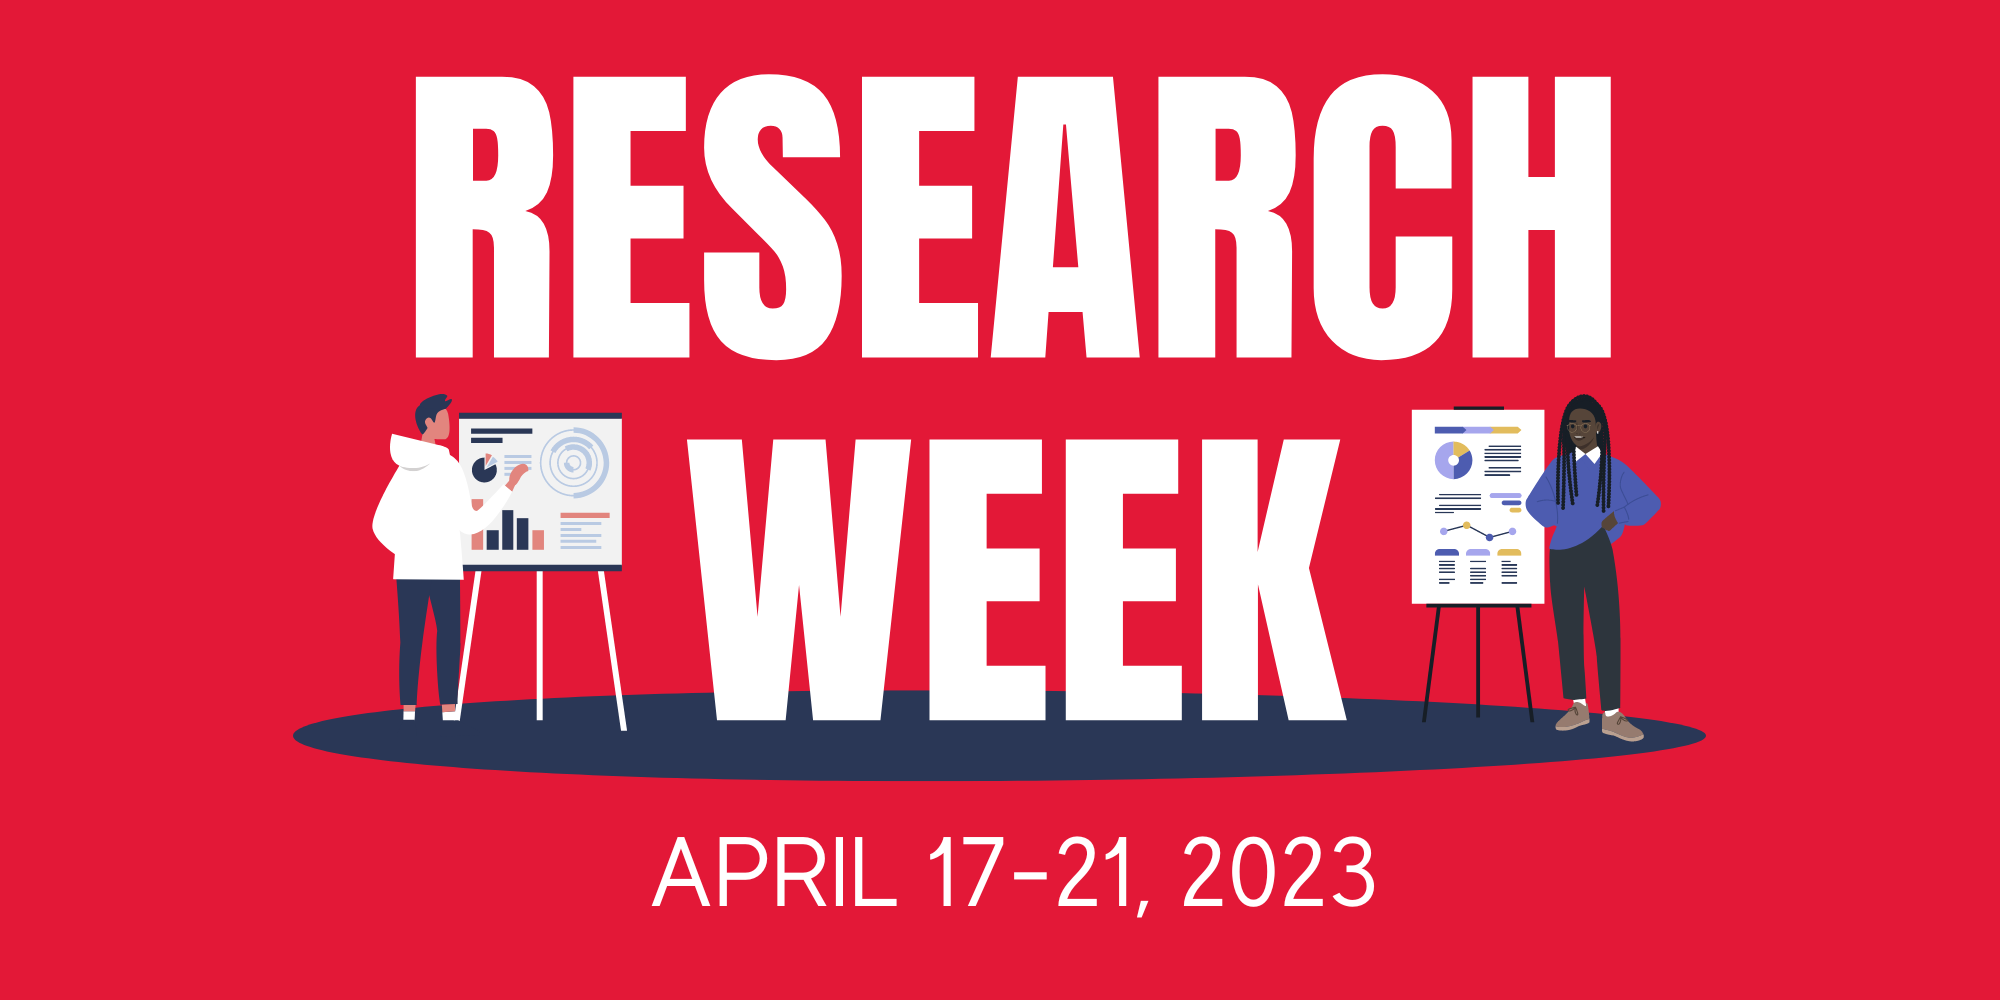 Research Week